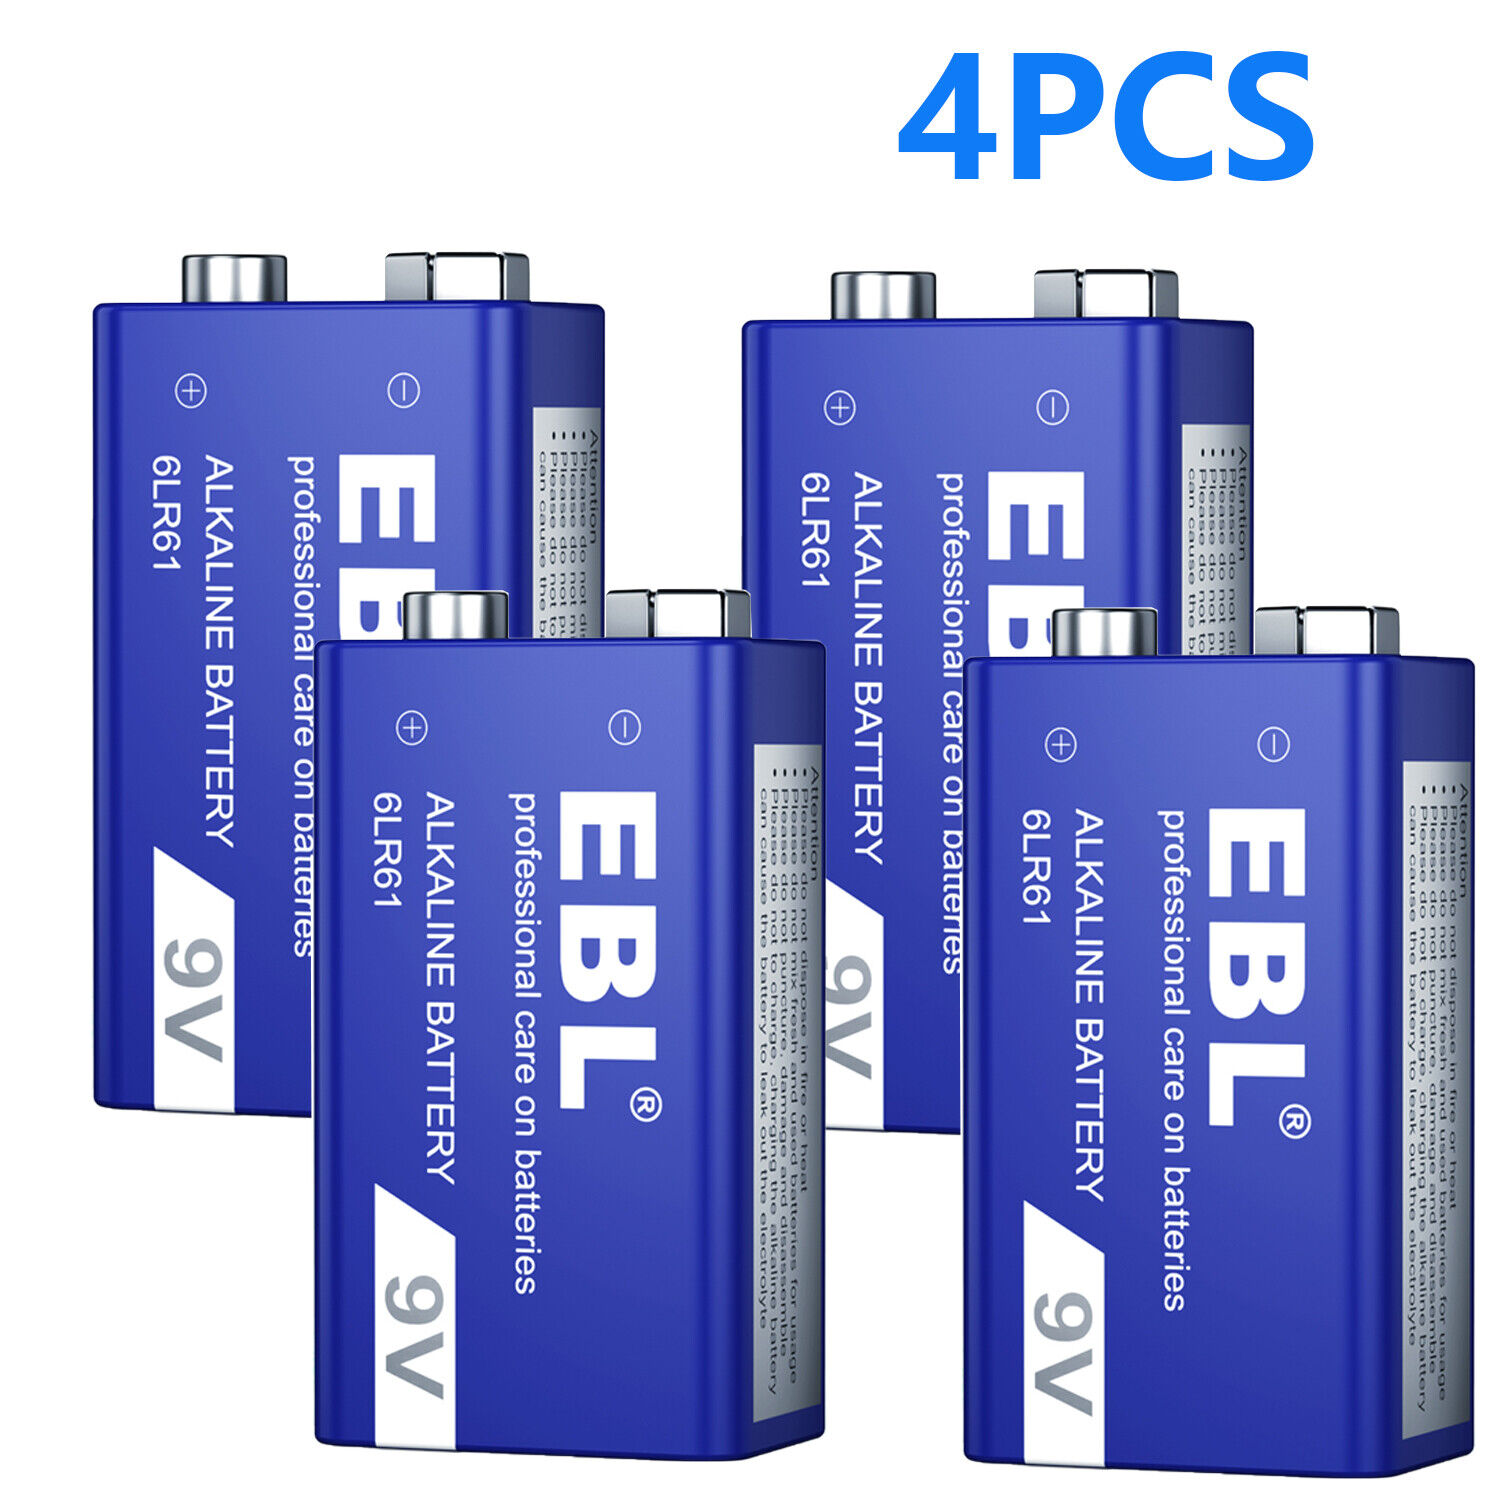 4pcs EBL 9V Alkaline Battery 6LR61 Batteries 9 Volt Long Lasting Leak Proof